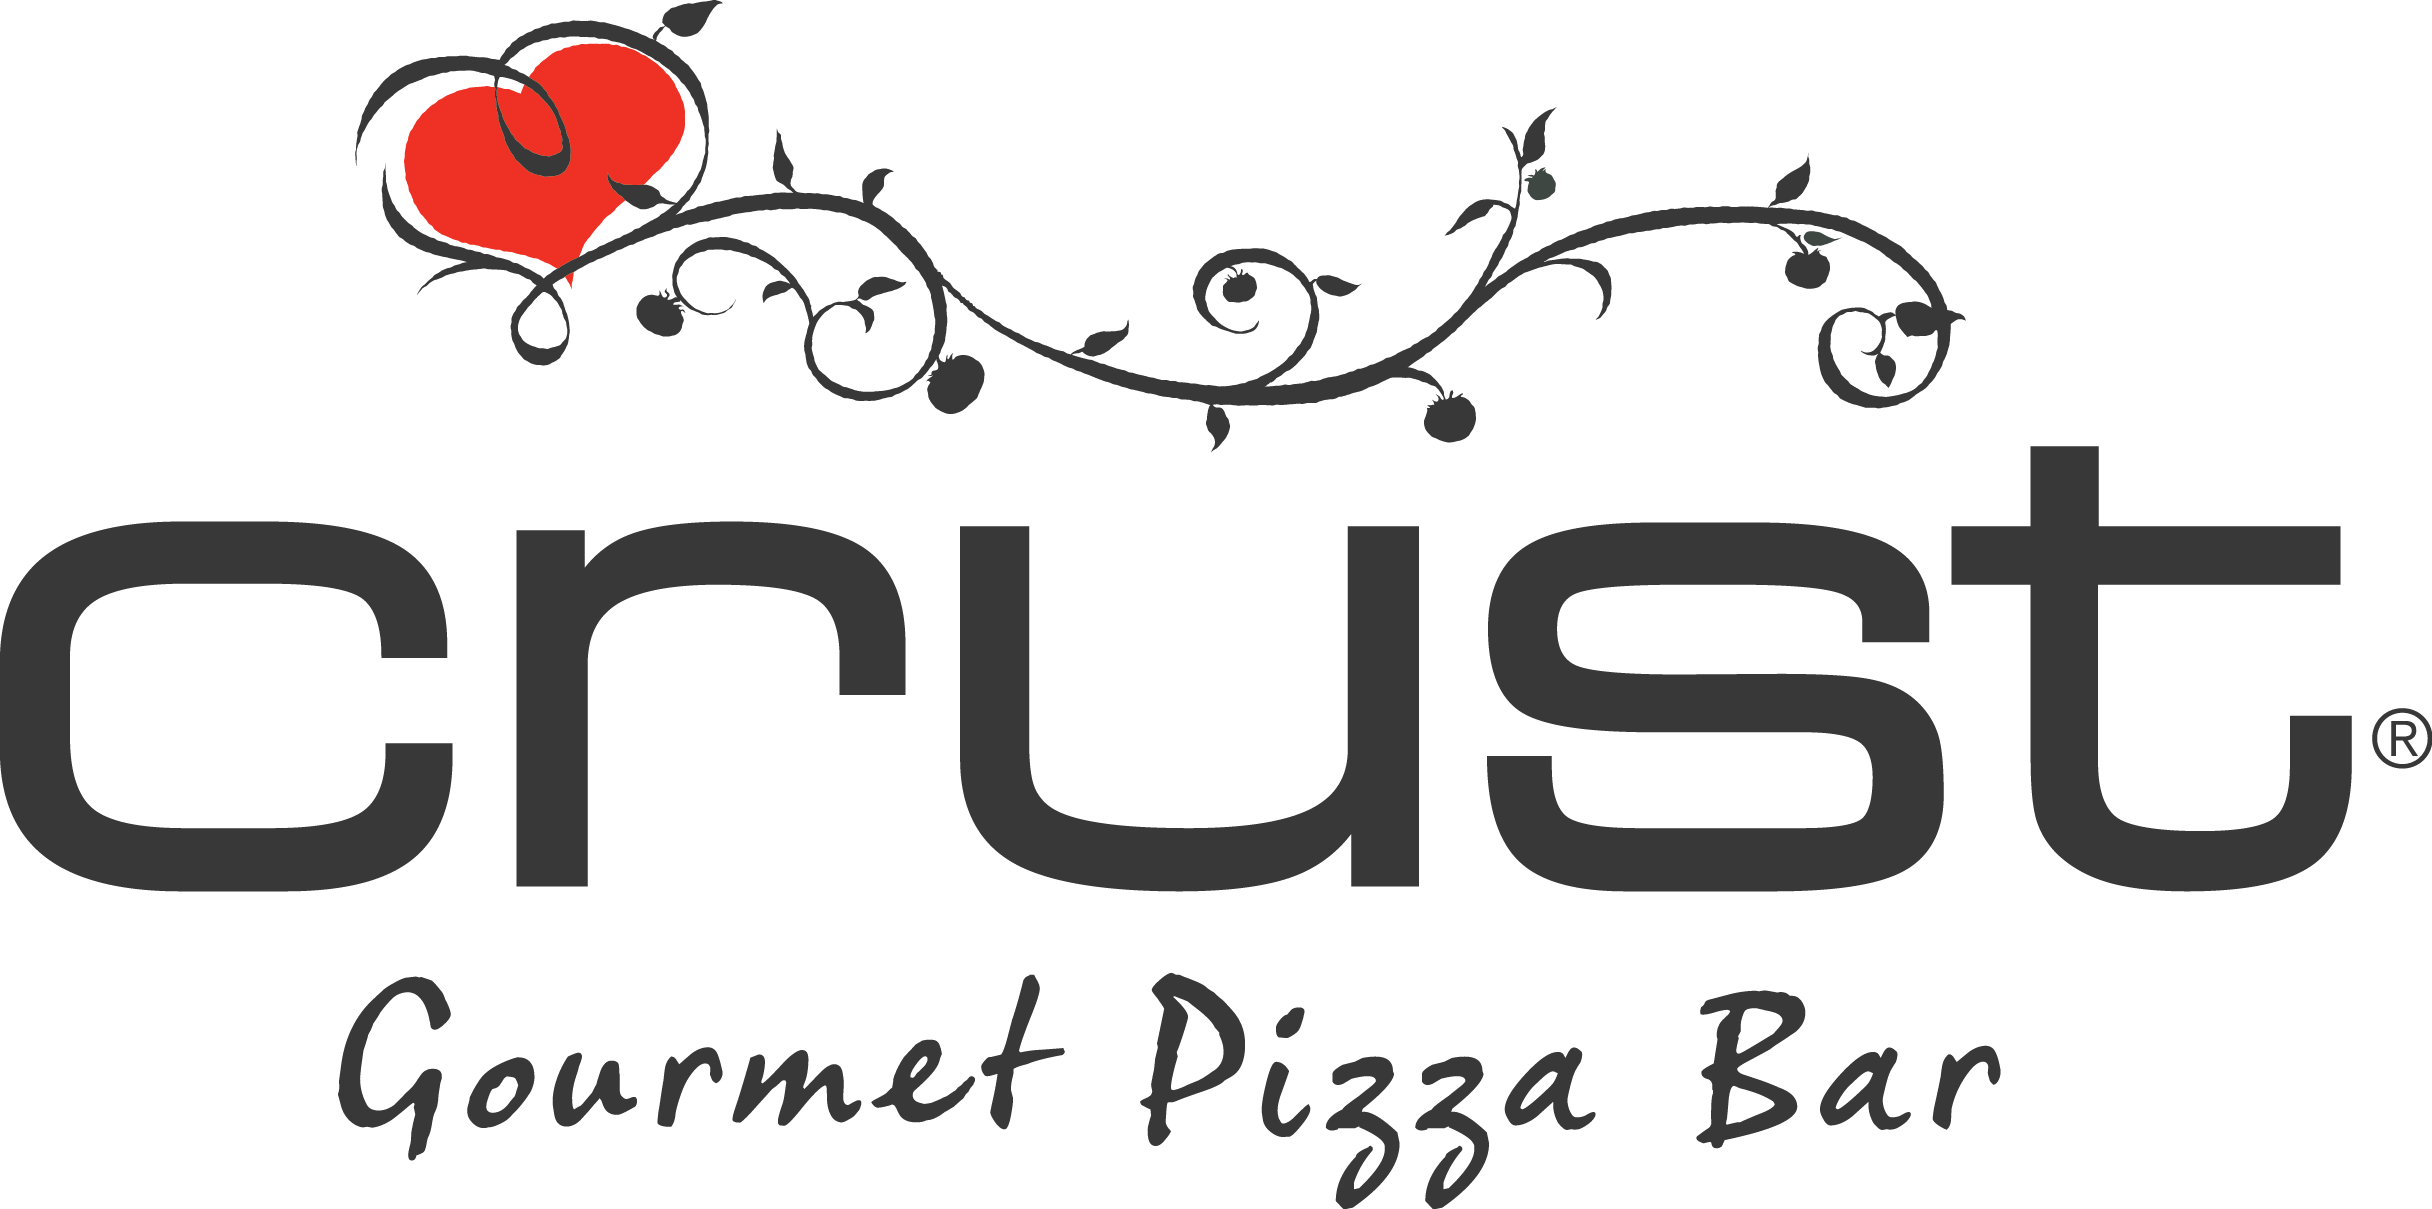 Crust Gourmet Pizza Bar